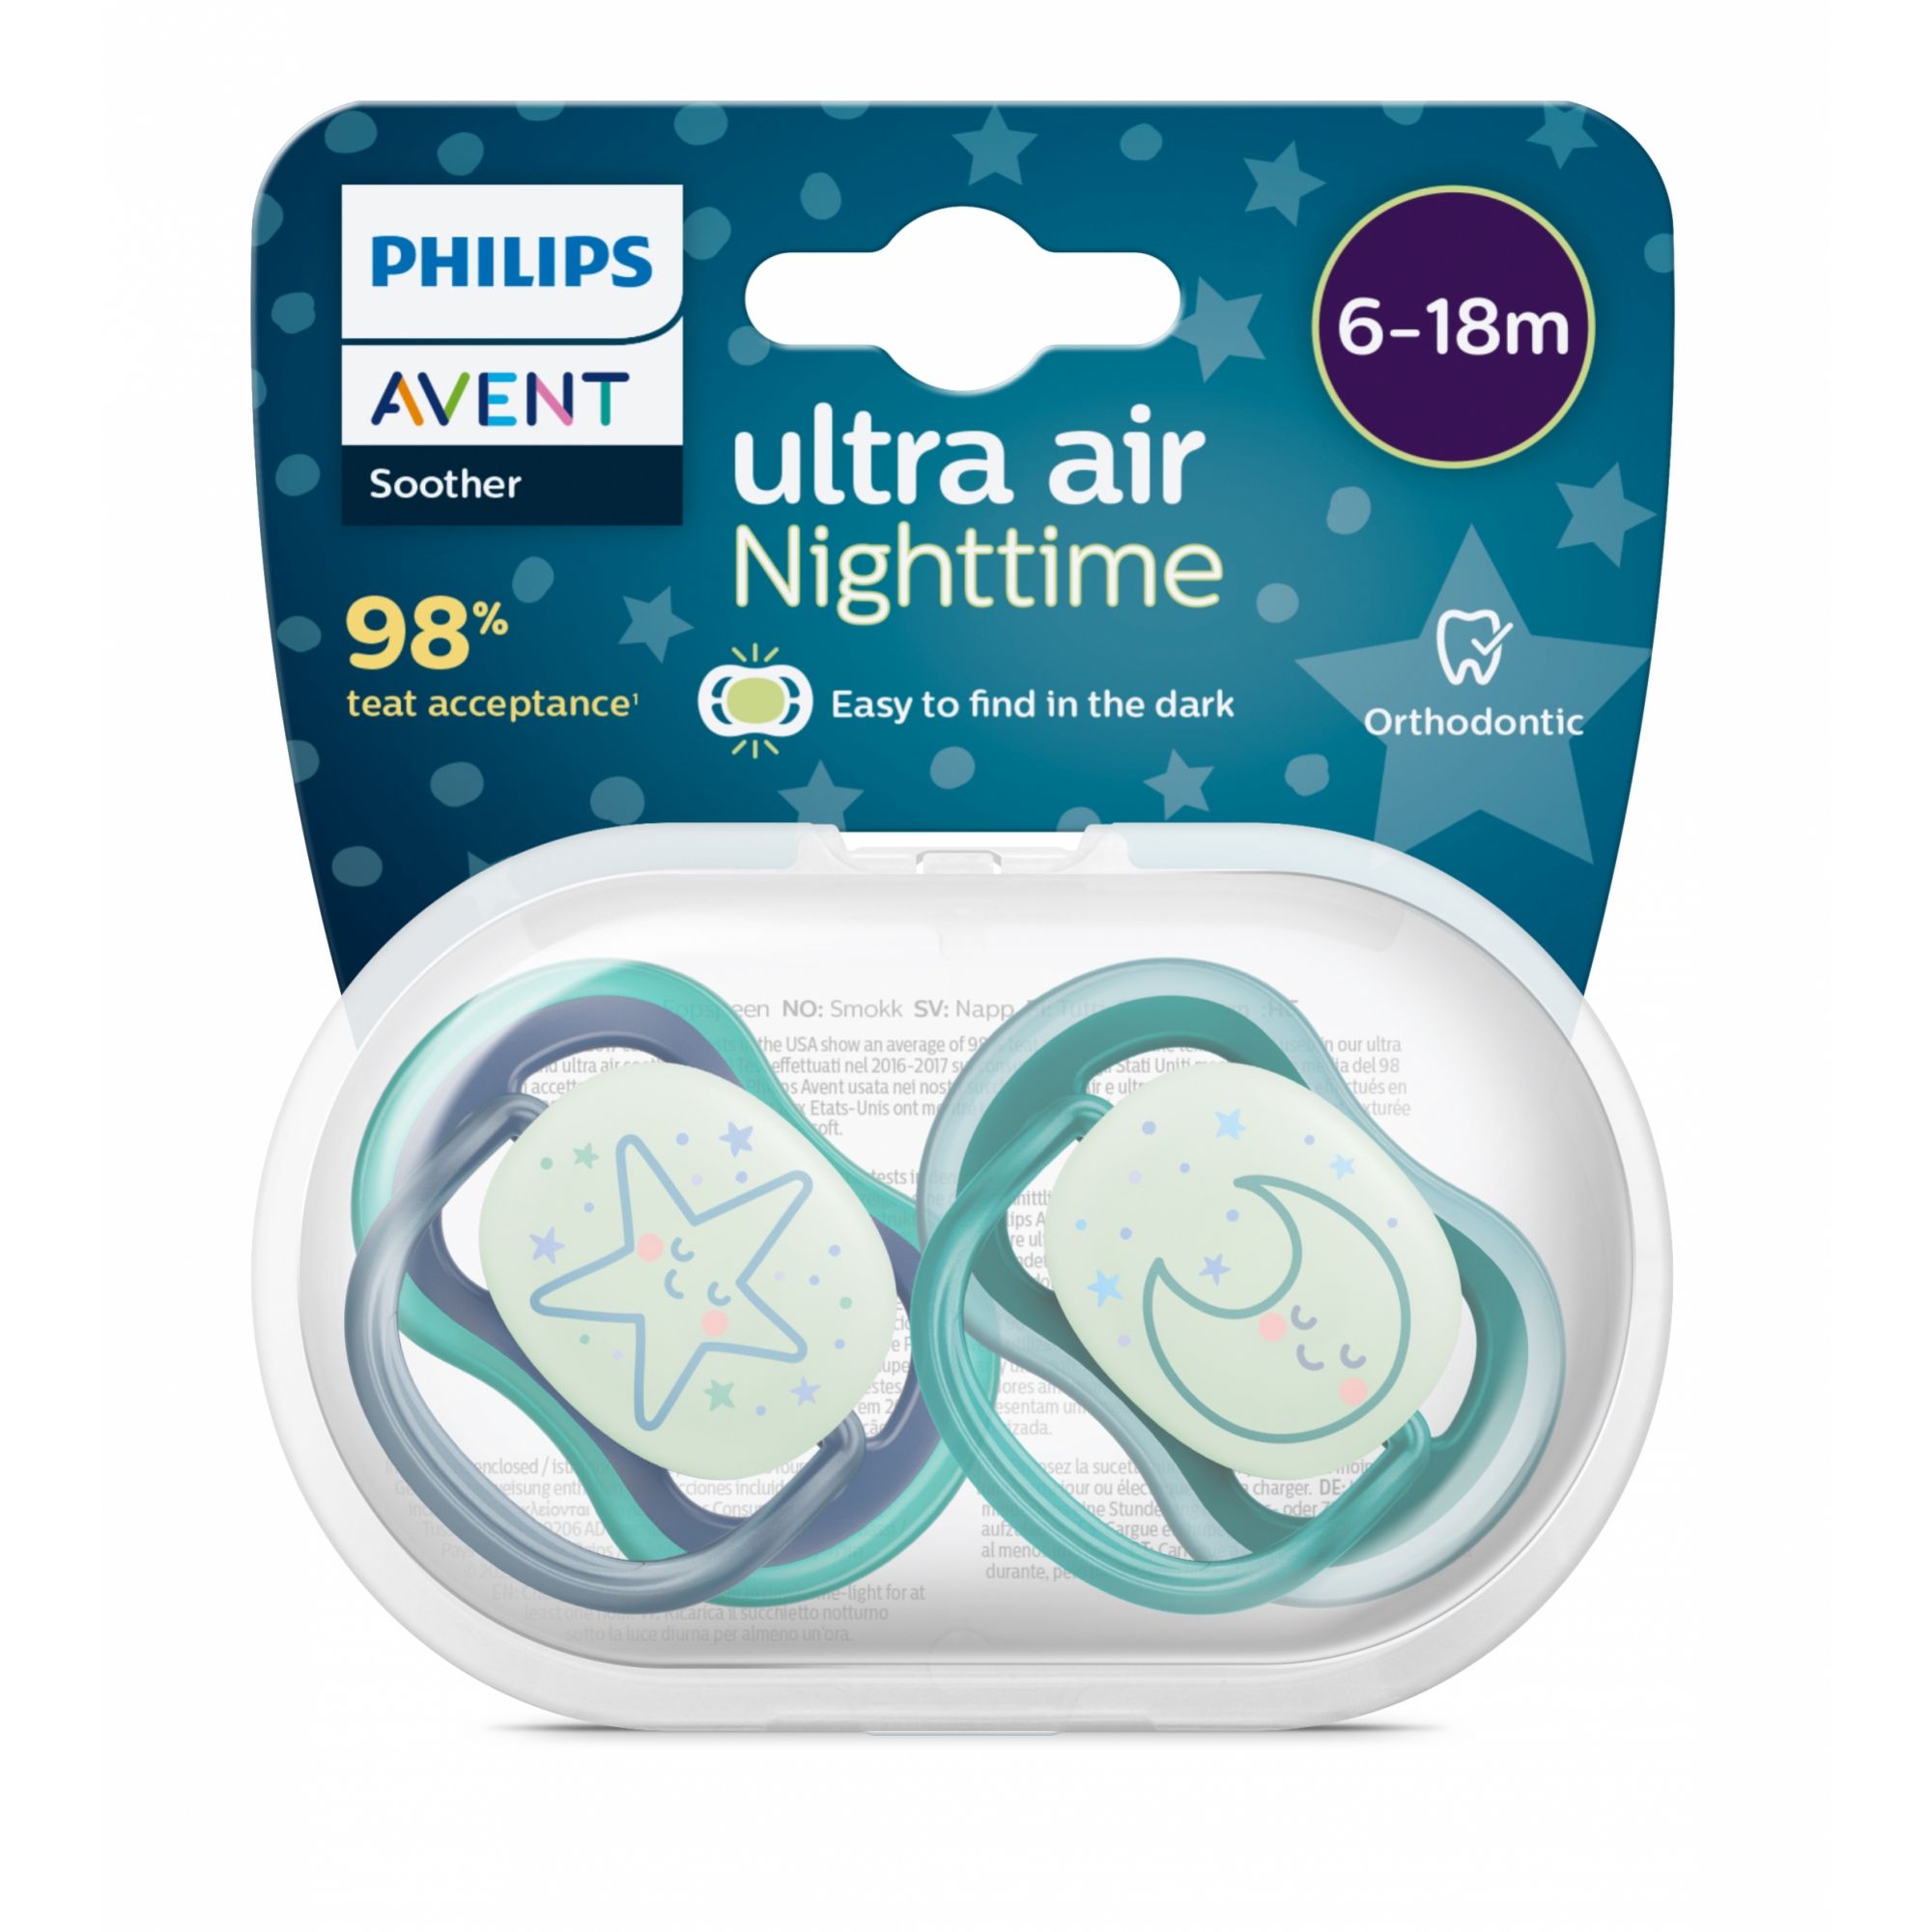 2 Sucettes Ultra Air Nuit, Philips Avent de Philips Avent